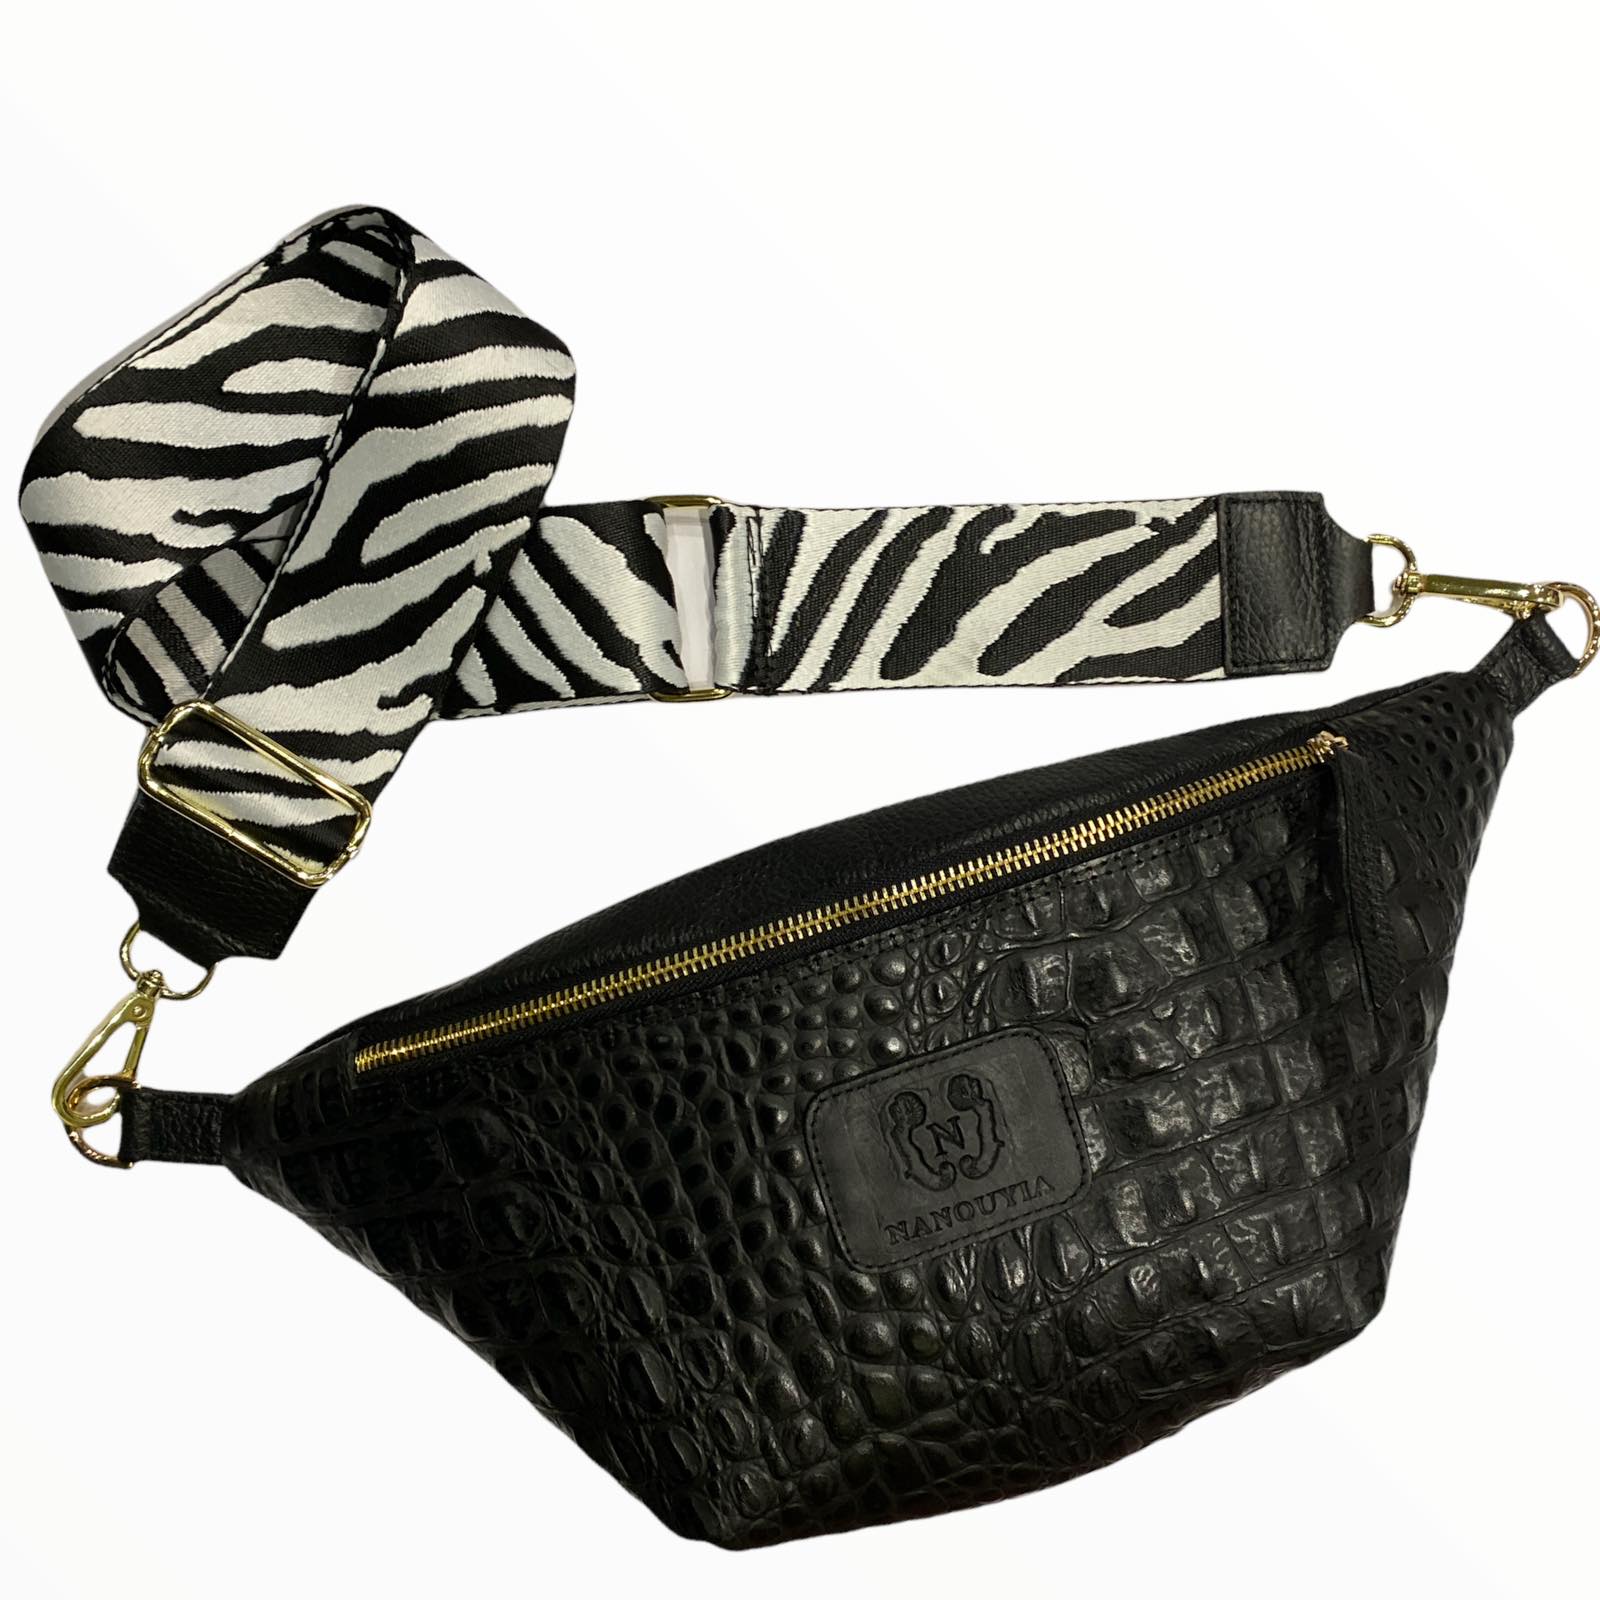 Black leather belt bag with zebra-print strap